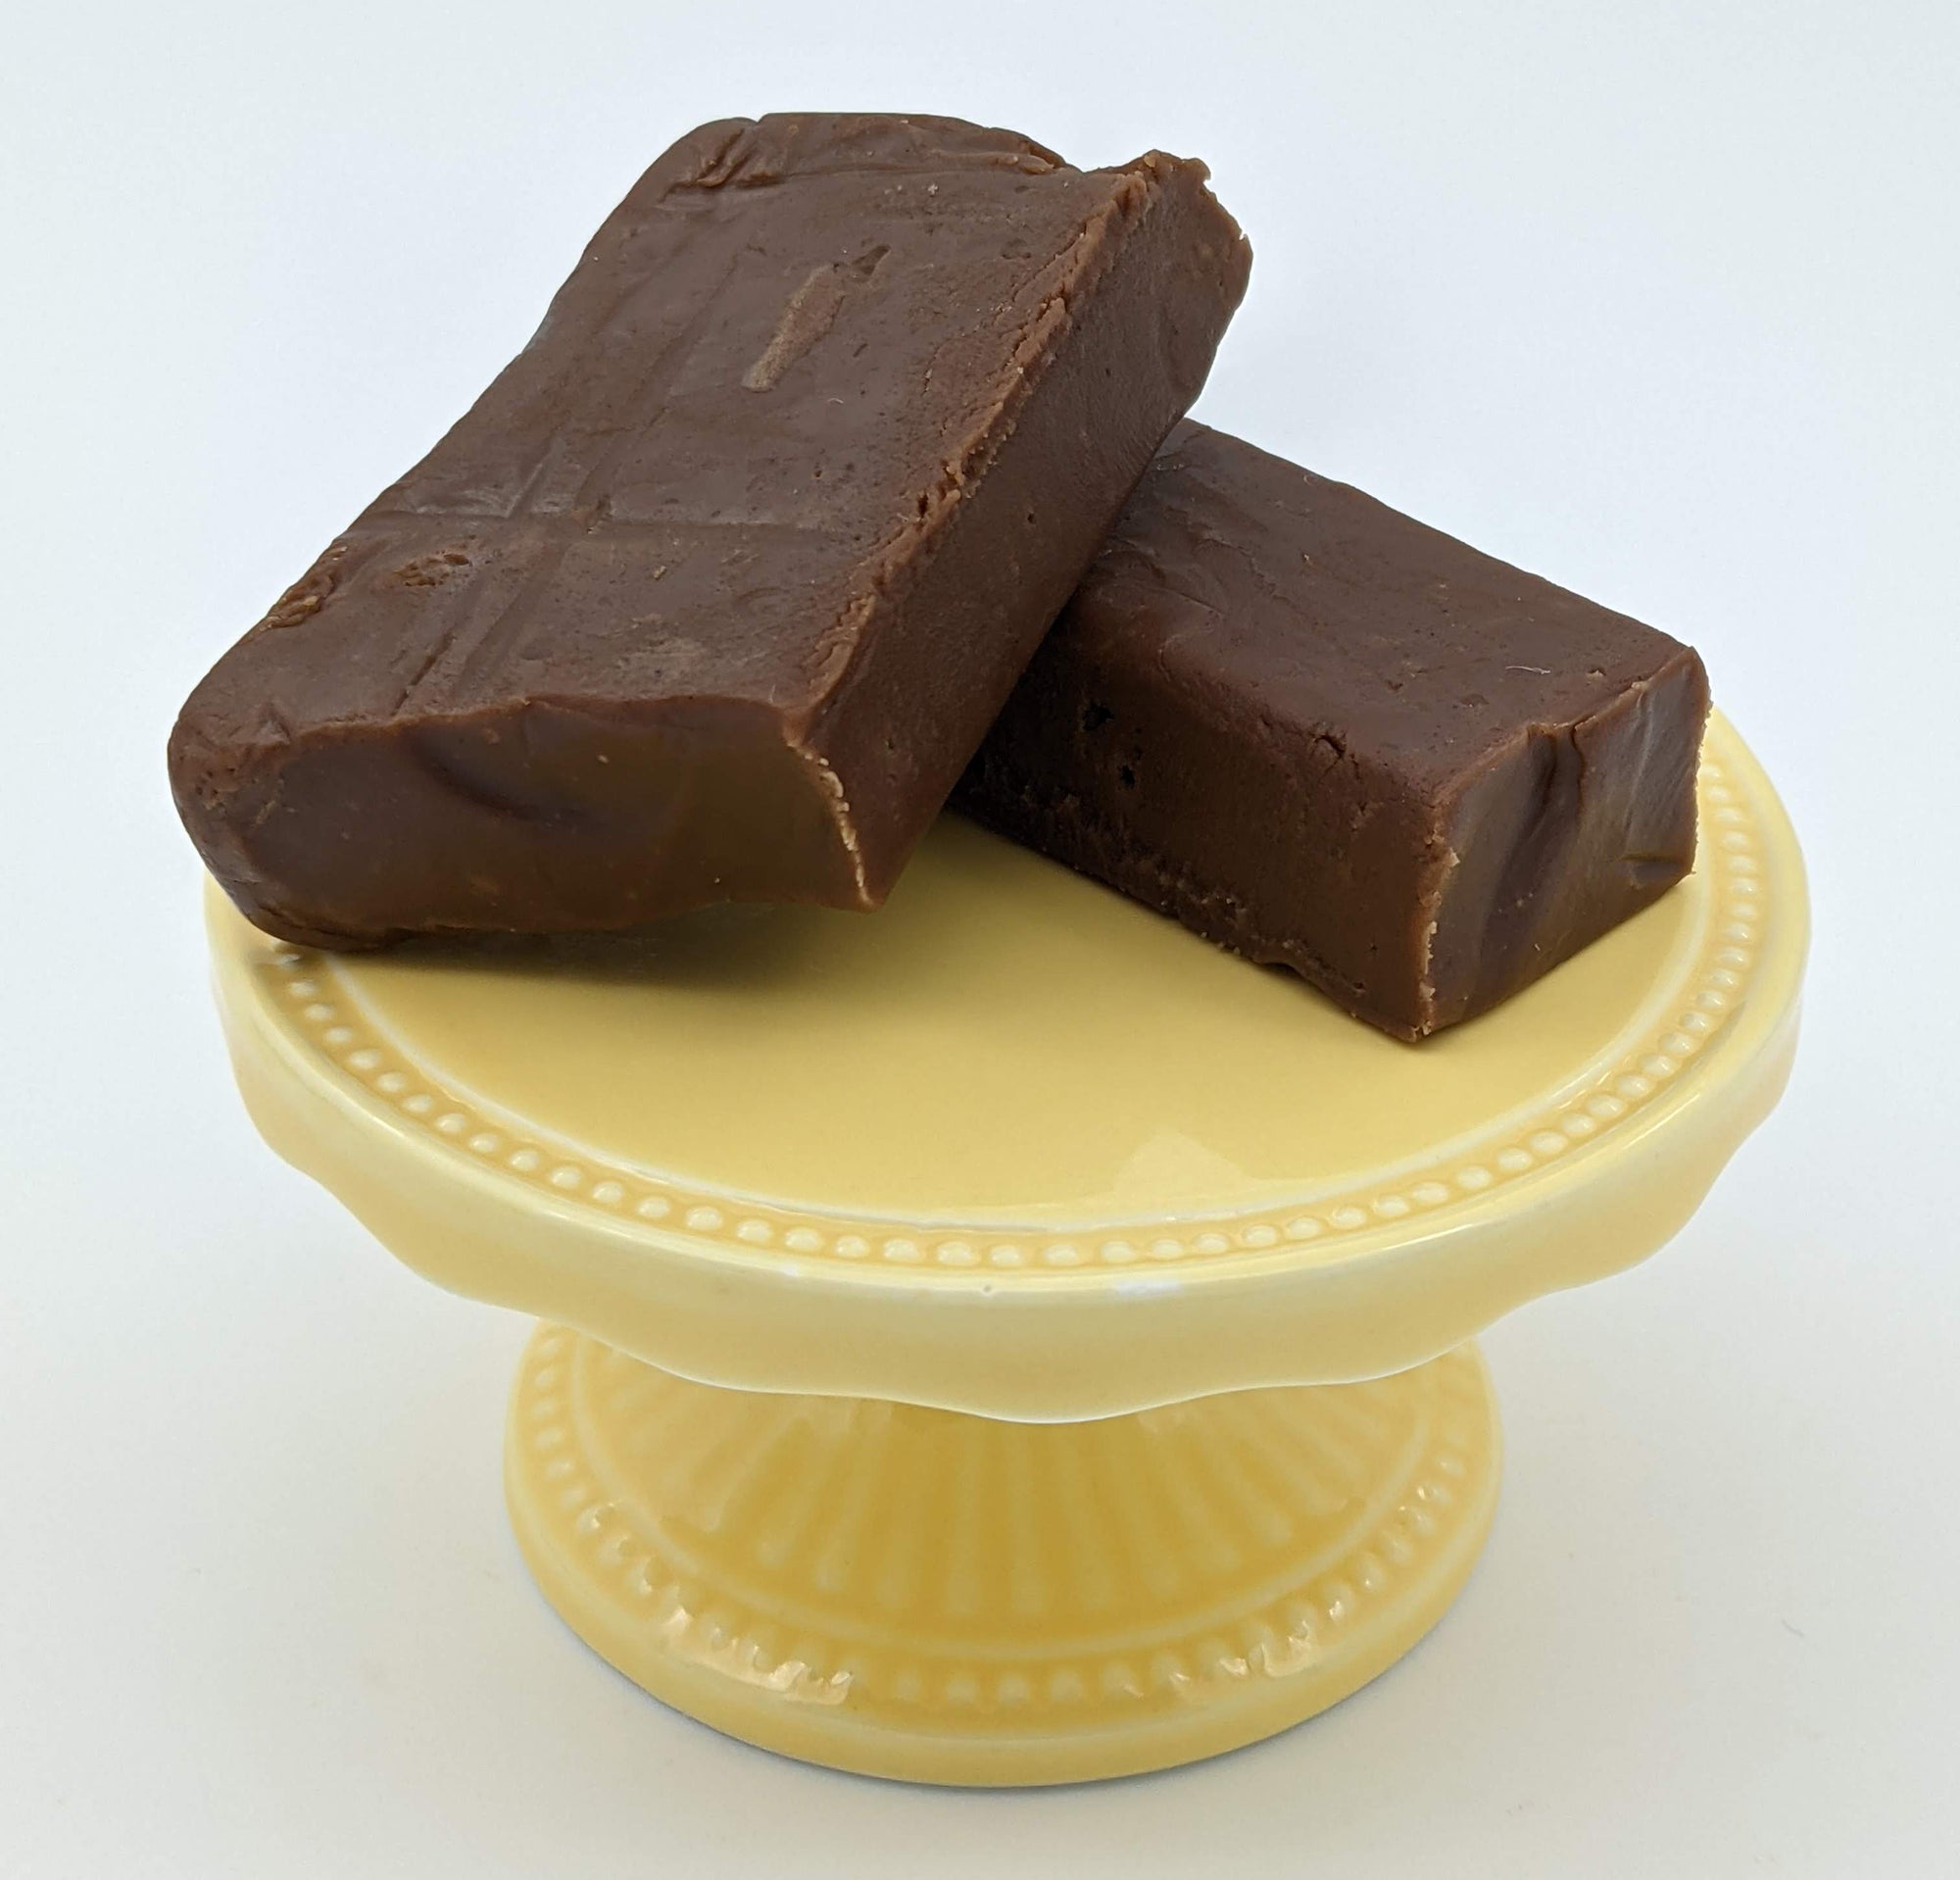 Fudge: Chocolate